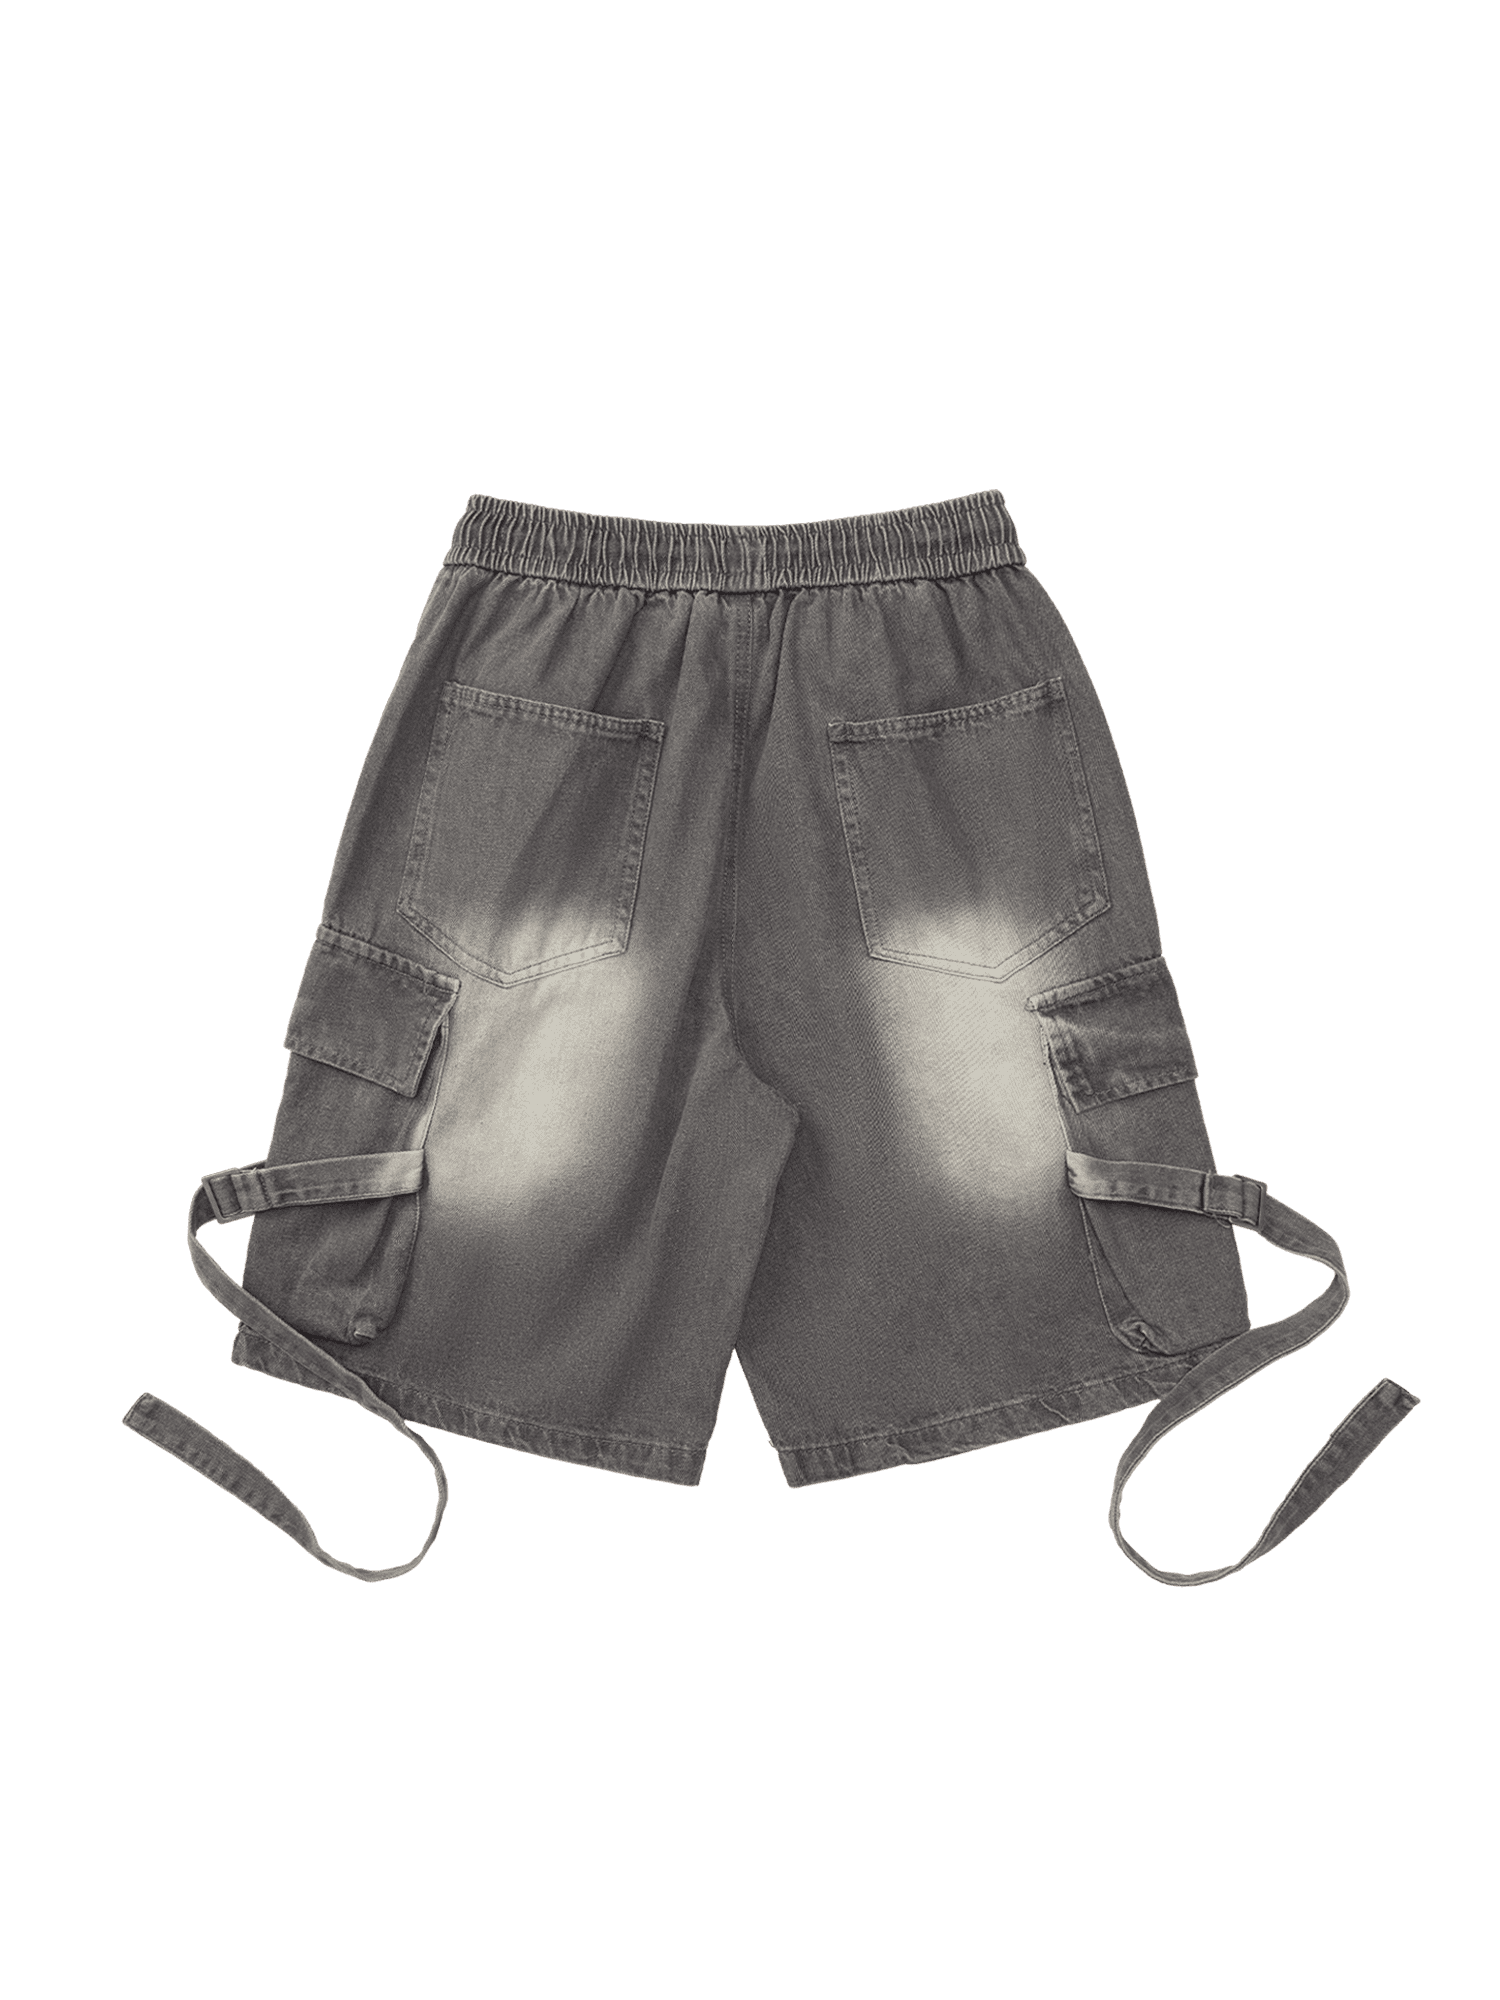 Thesupermade Vintage Distressed Drawstring Ripped Denim Shorts